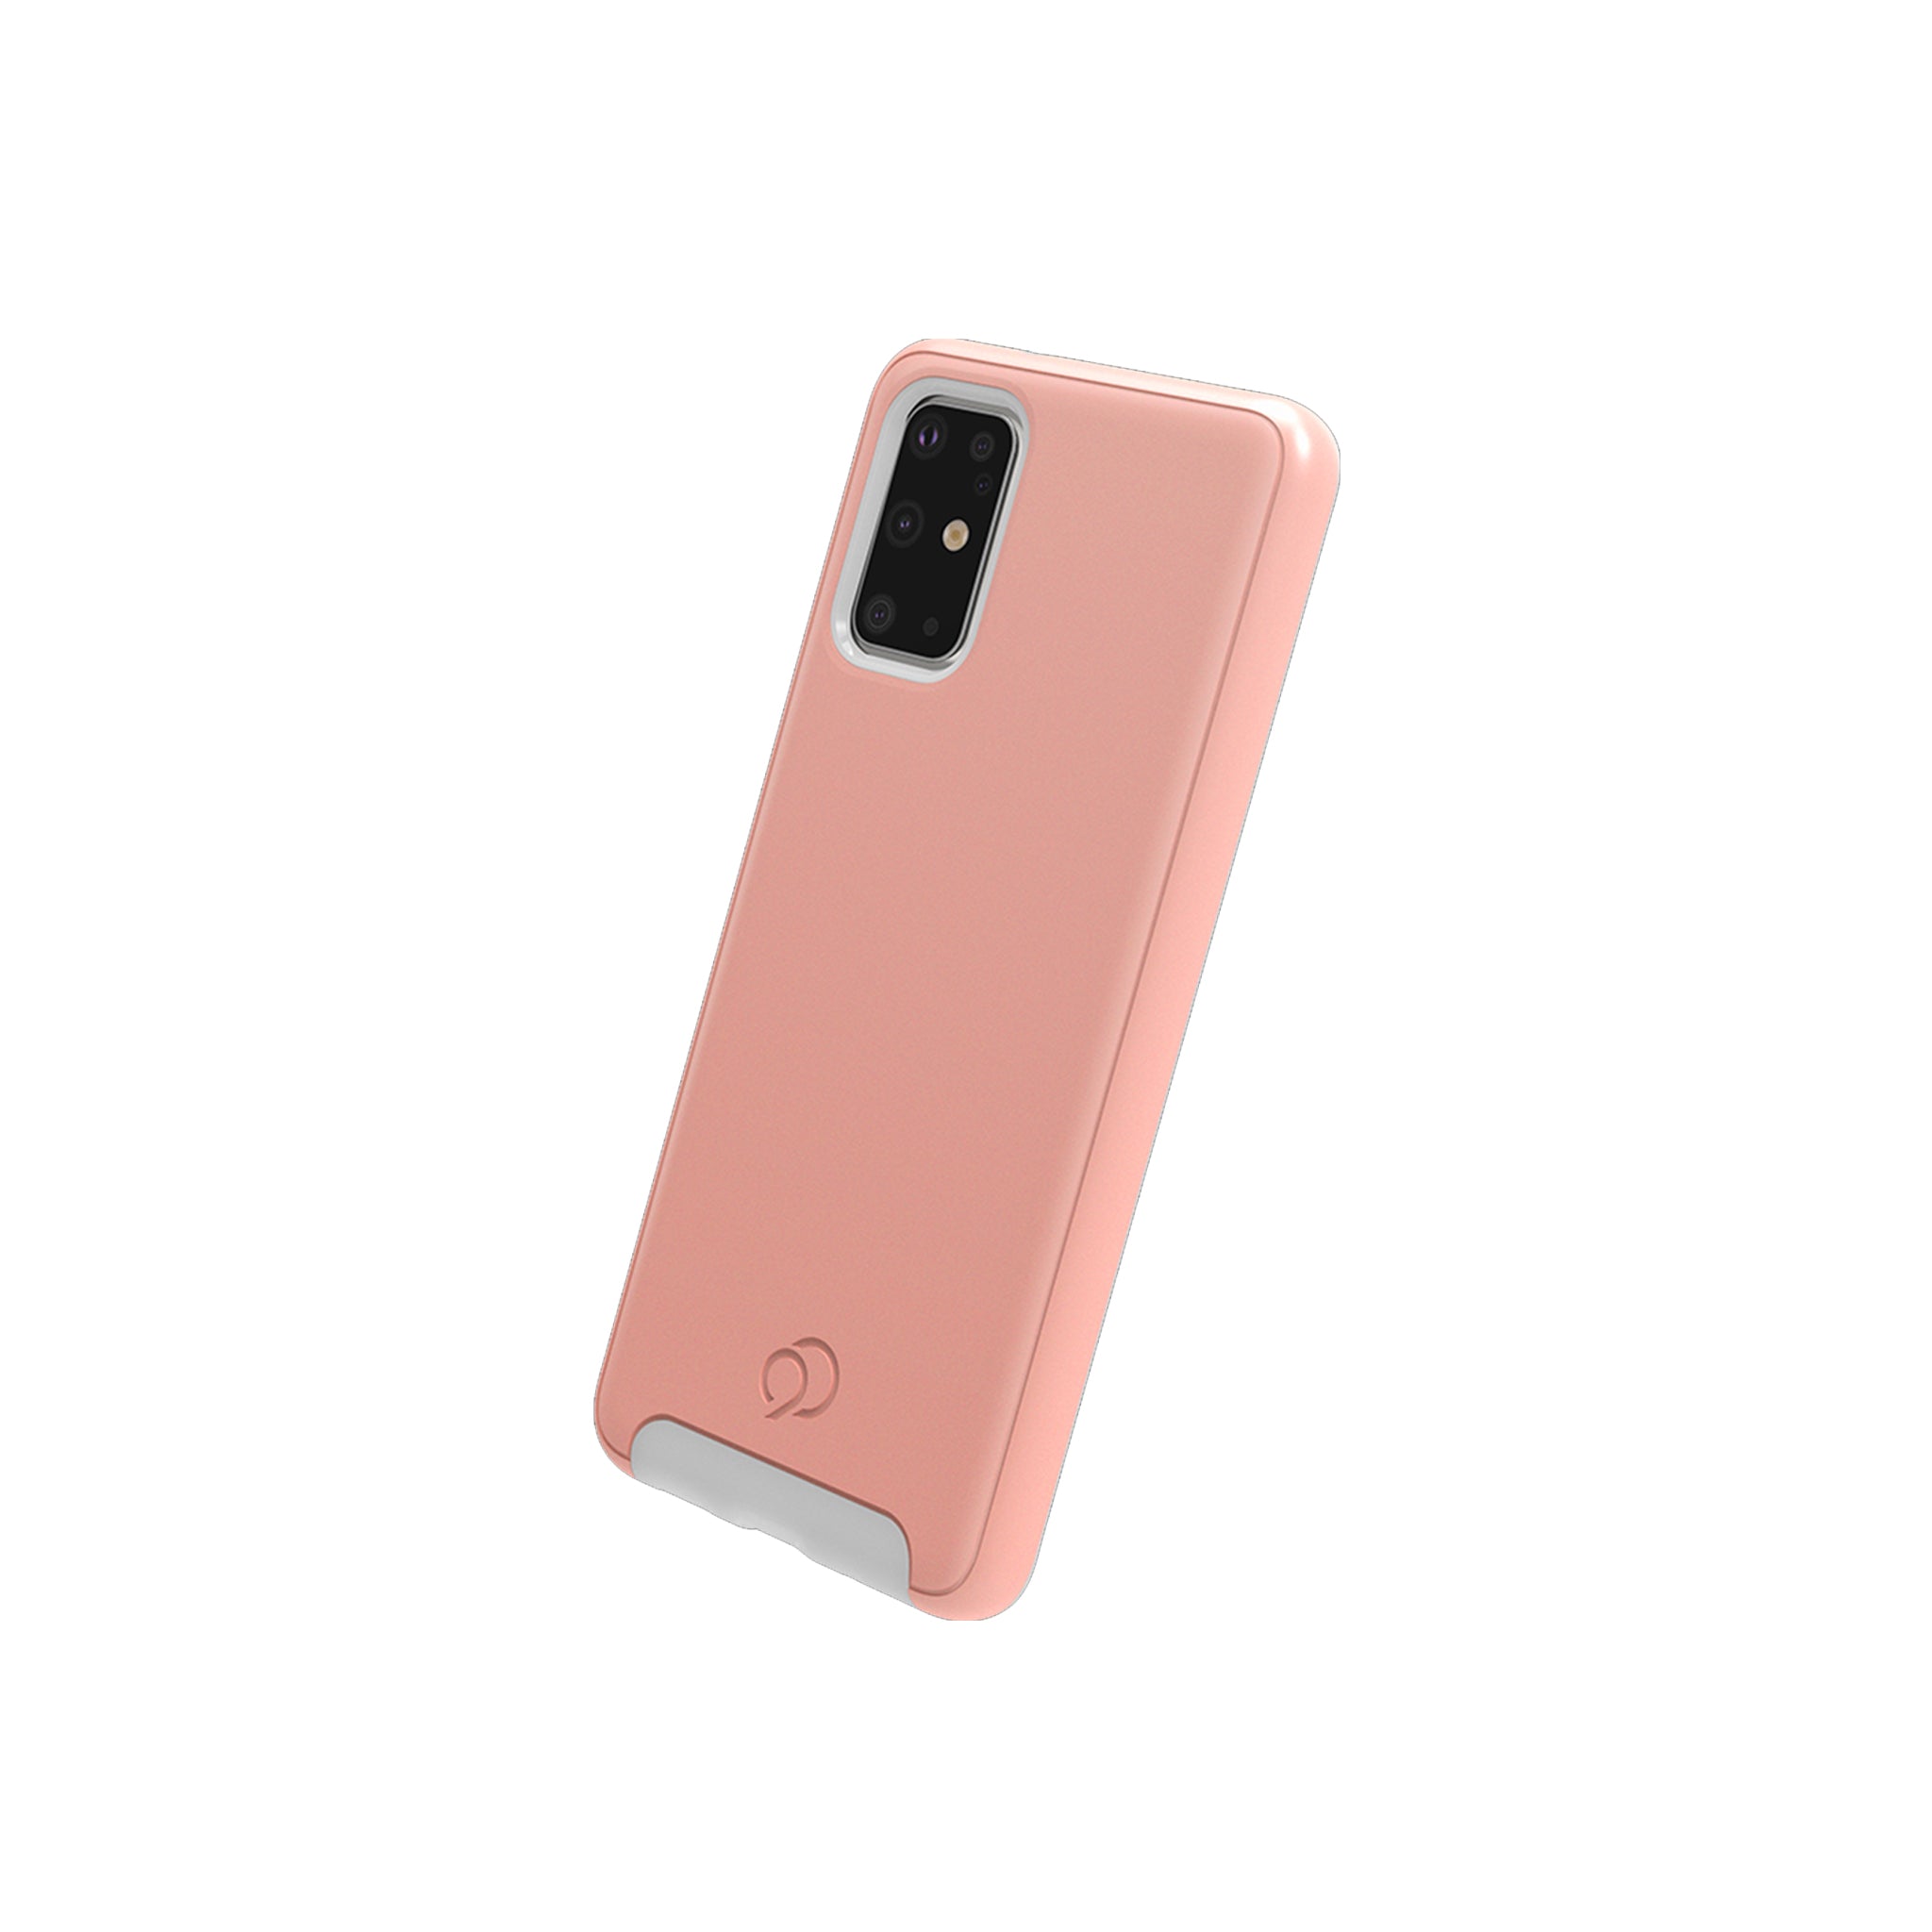 Nimbus9 - Cirrus 2 Case For Samsung Galaxy S20 / S20 5g Uw - Rose Clear